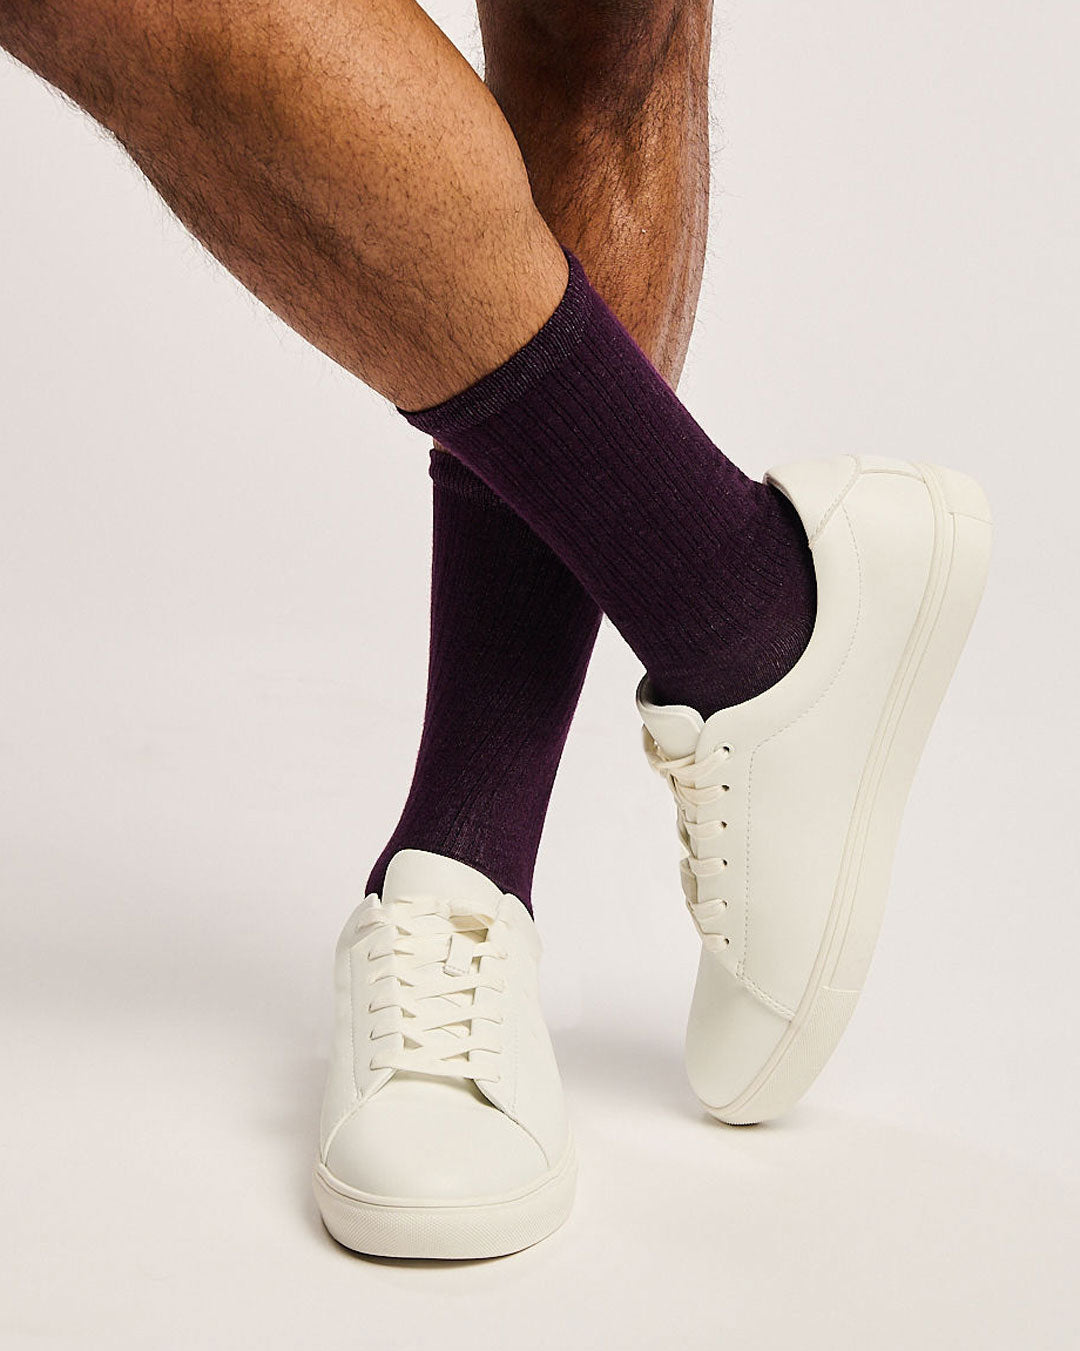 Seamless toe socks, arch support socks, welly boot socks